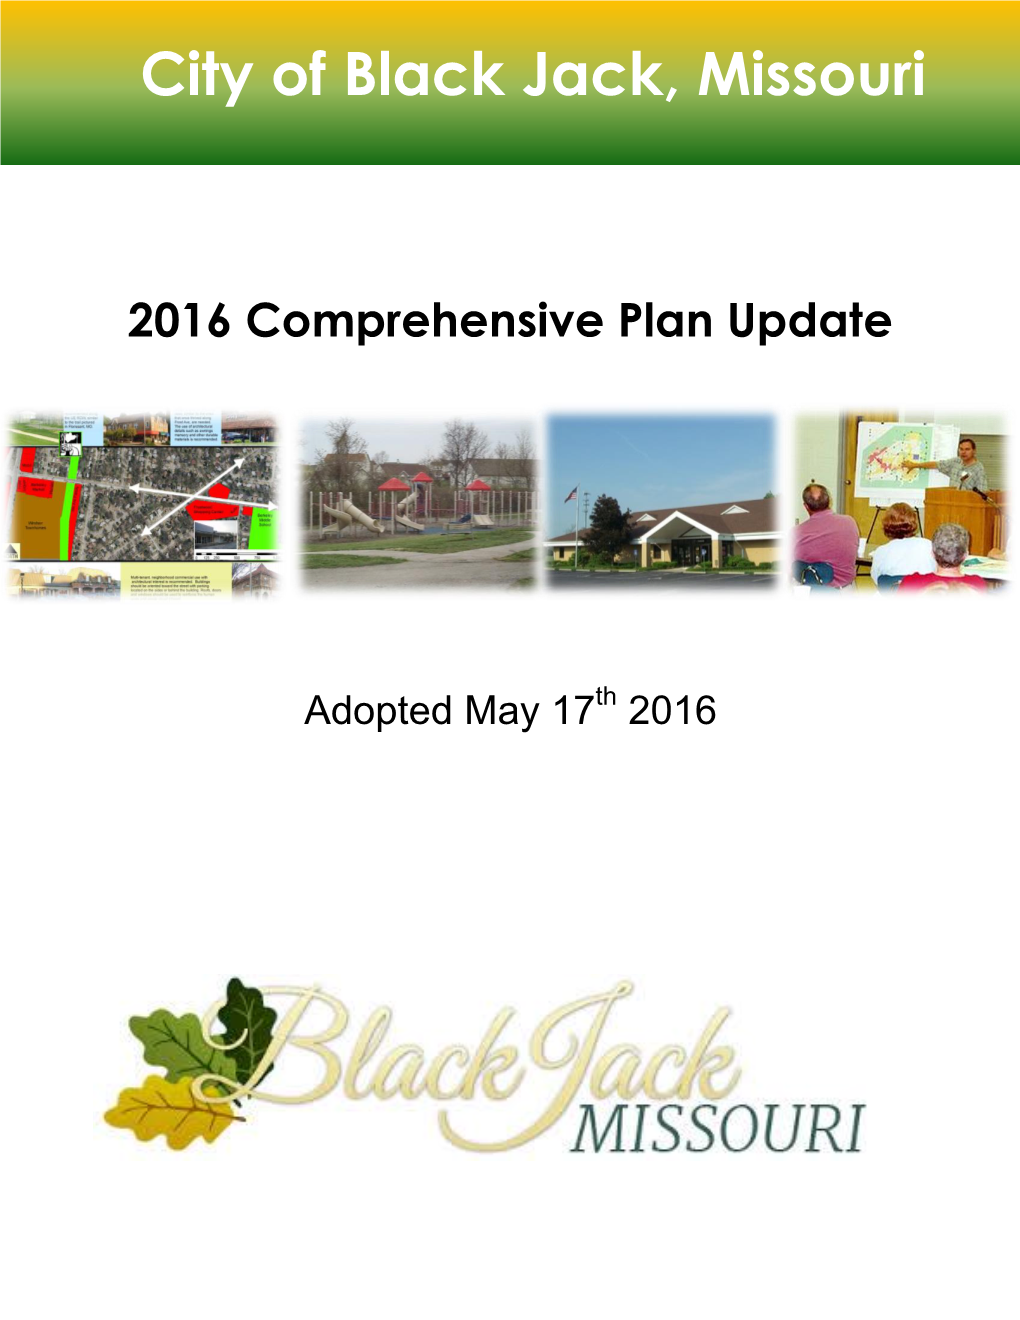 City of Black Jack Comprehensive Plan Update